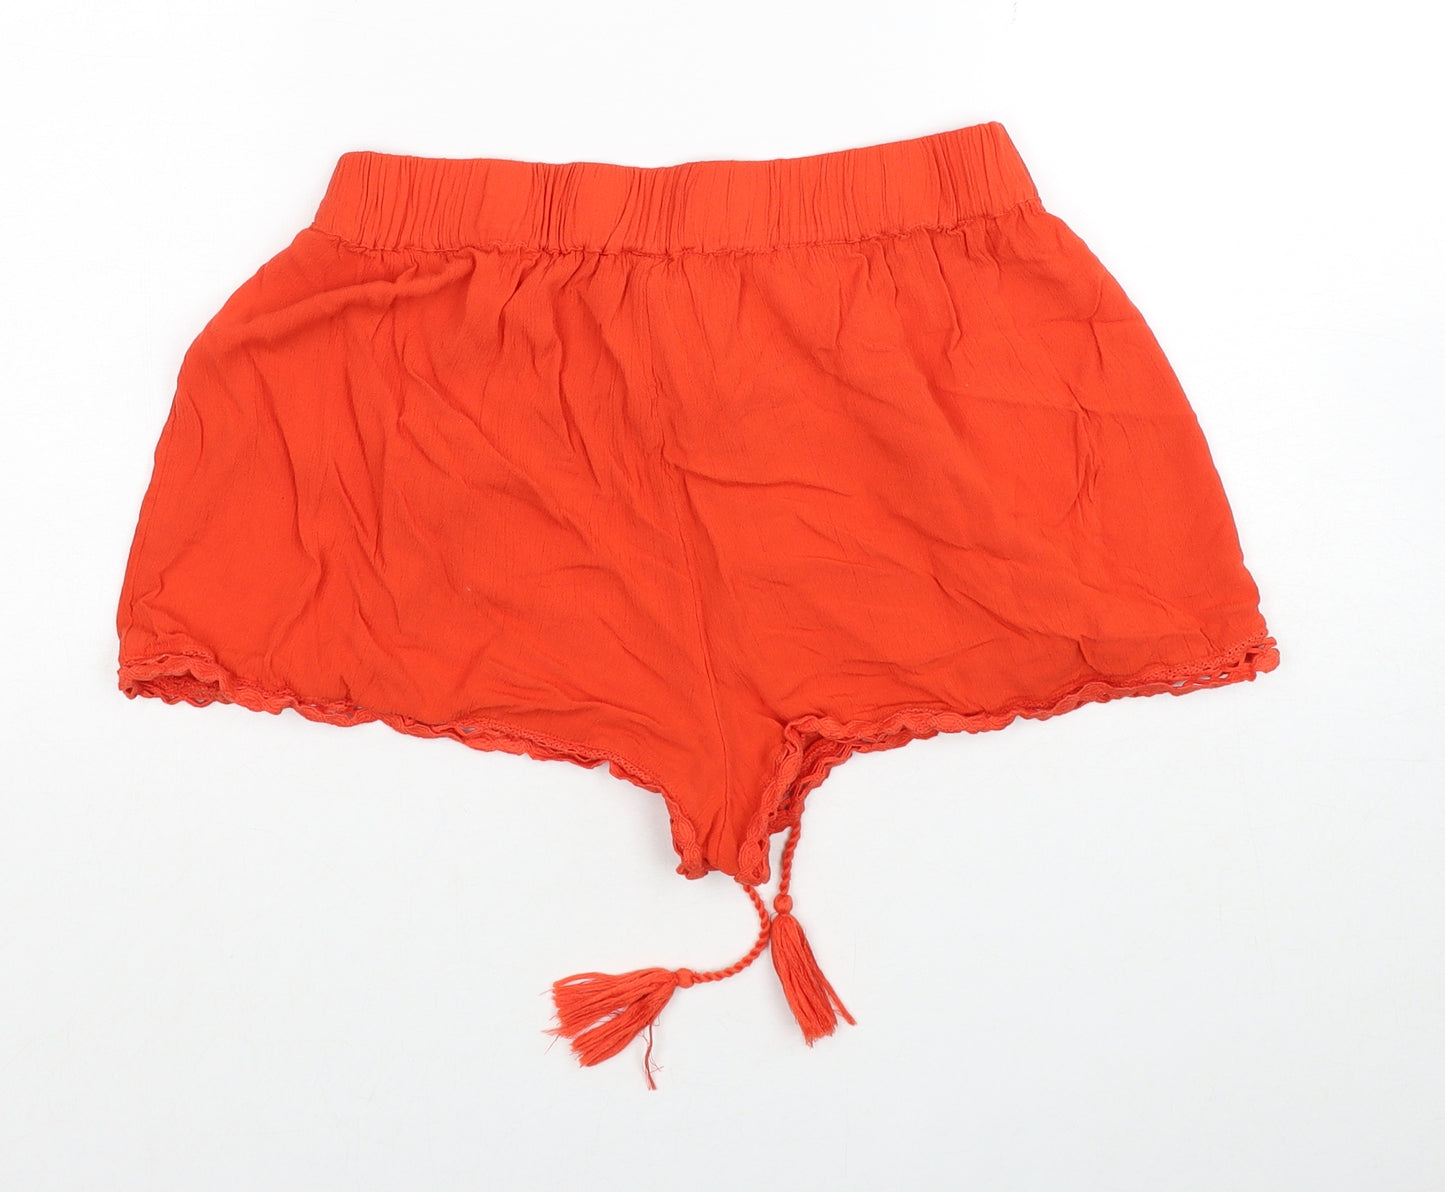 Papaya Womens Red Viscose Basic Shorts Size 12 Regular Drawstring - Lace Details